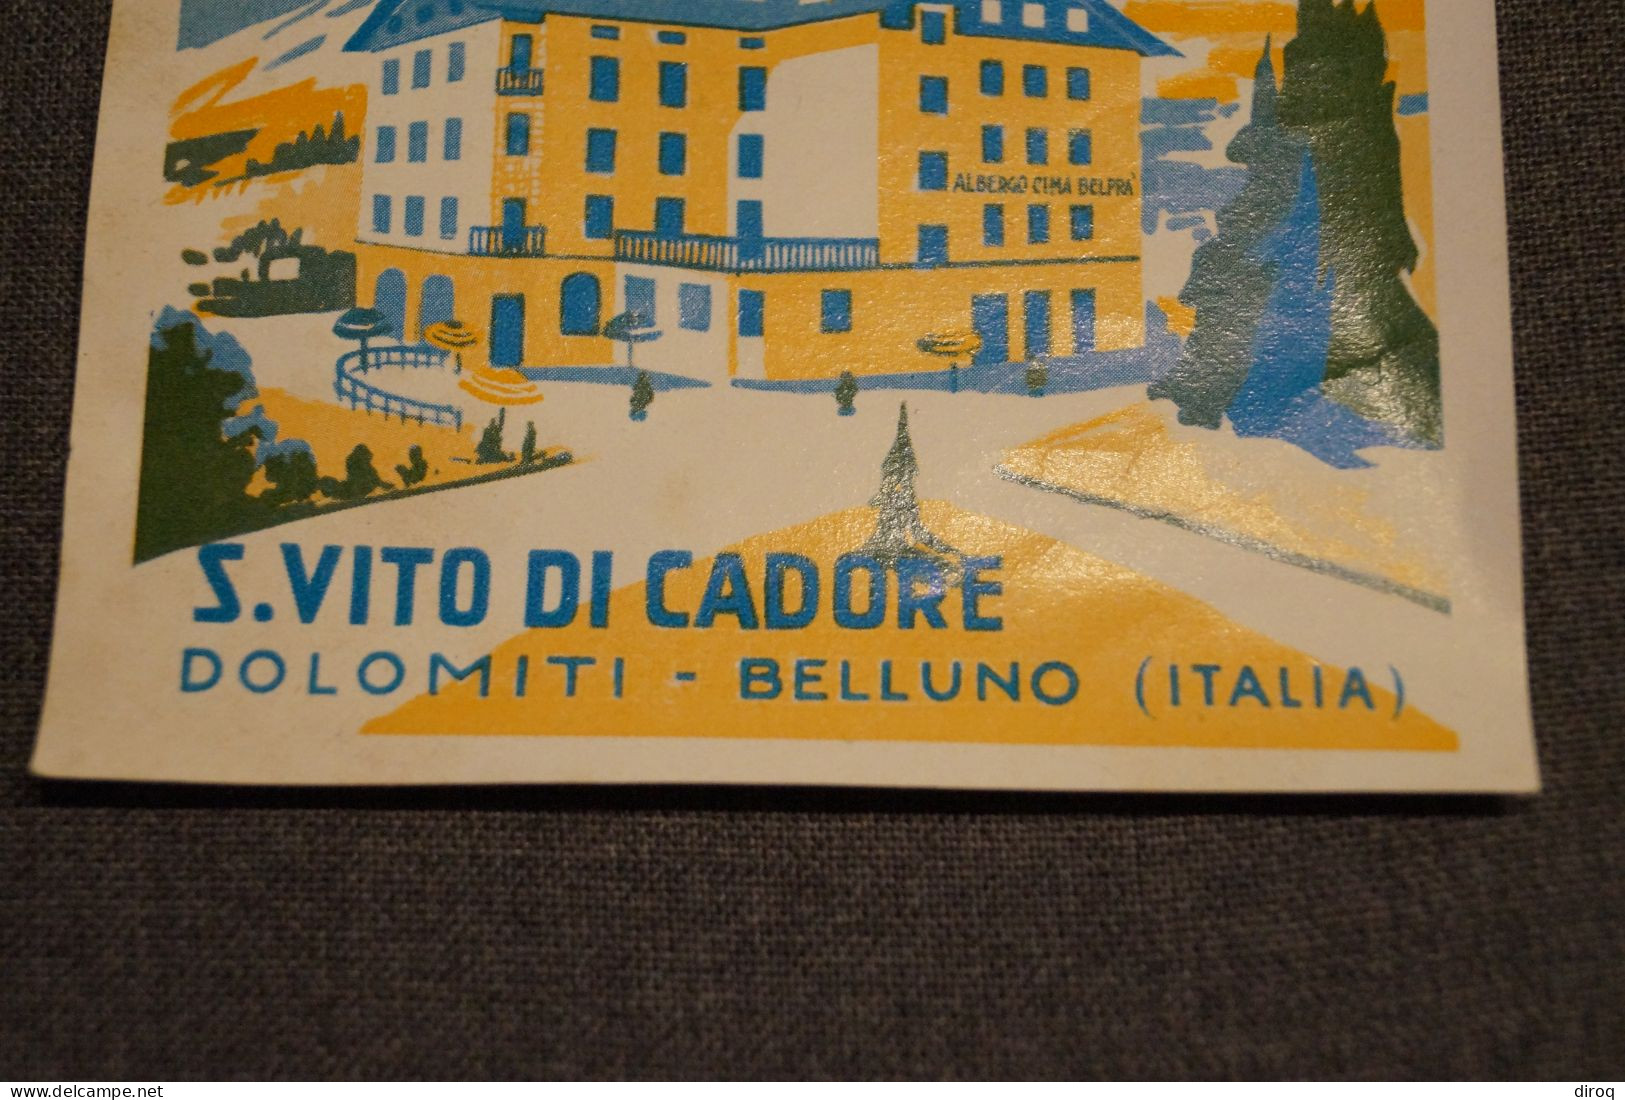 Belle Ancienne Petite Affiche Originale,Italie,Albergo Cima Belpra,Dolomiti - Belluno,122 / 102 Mm. - Manifesti